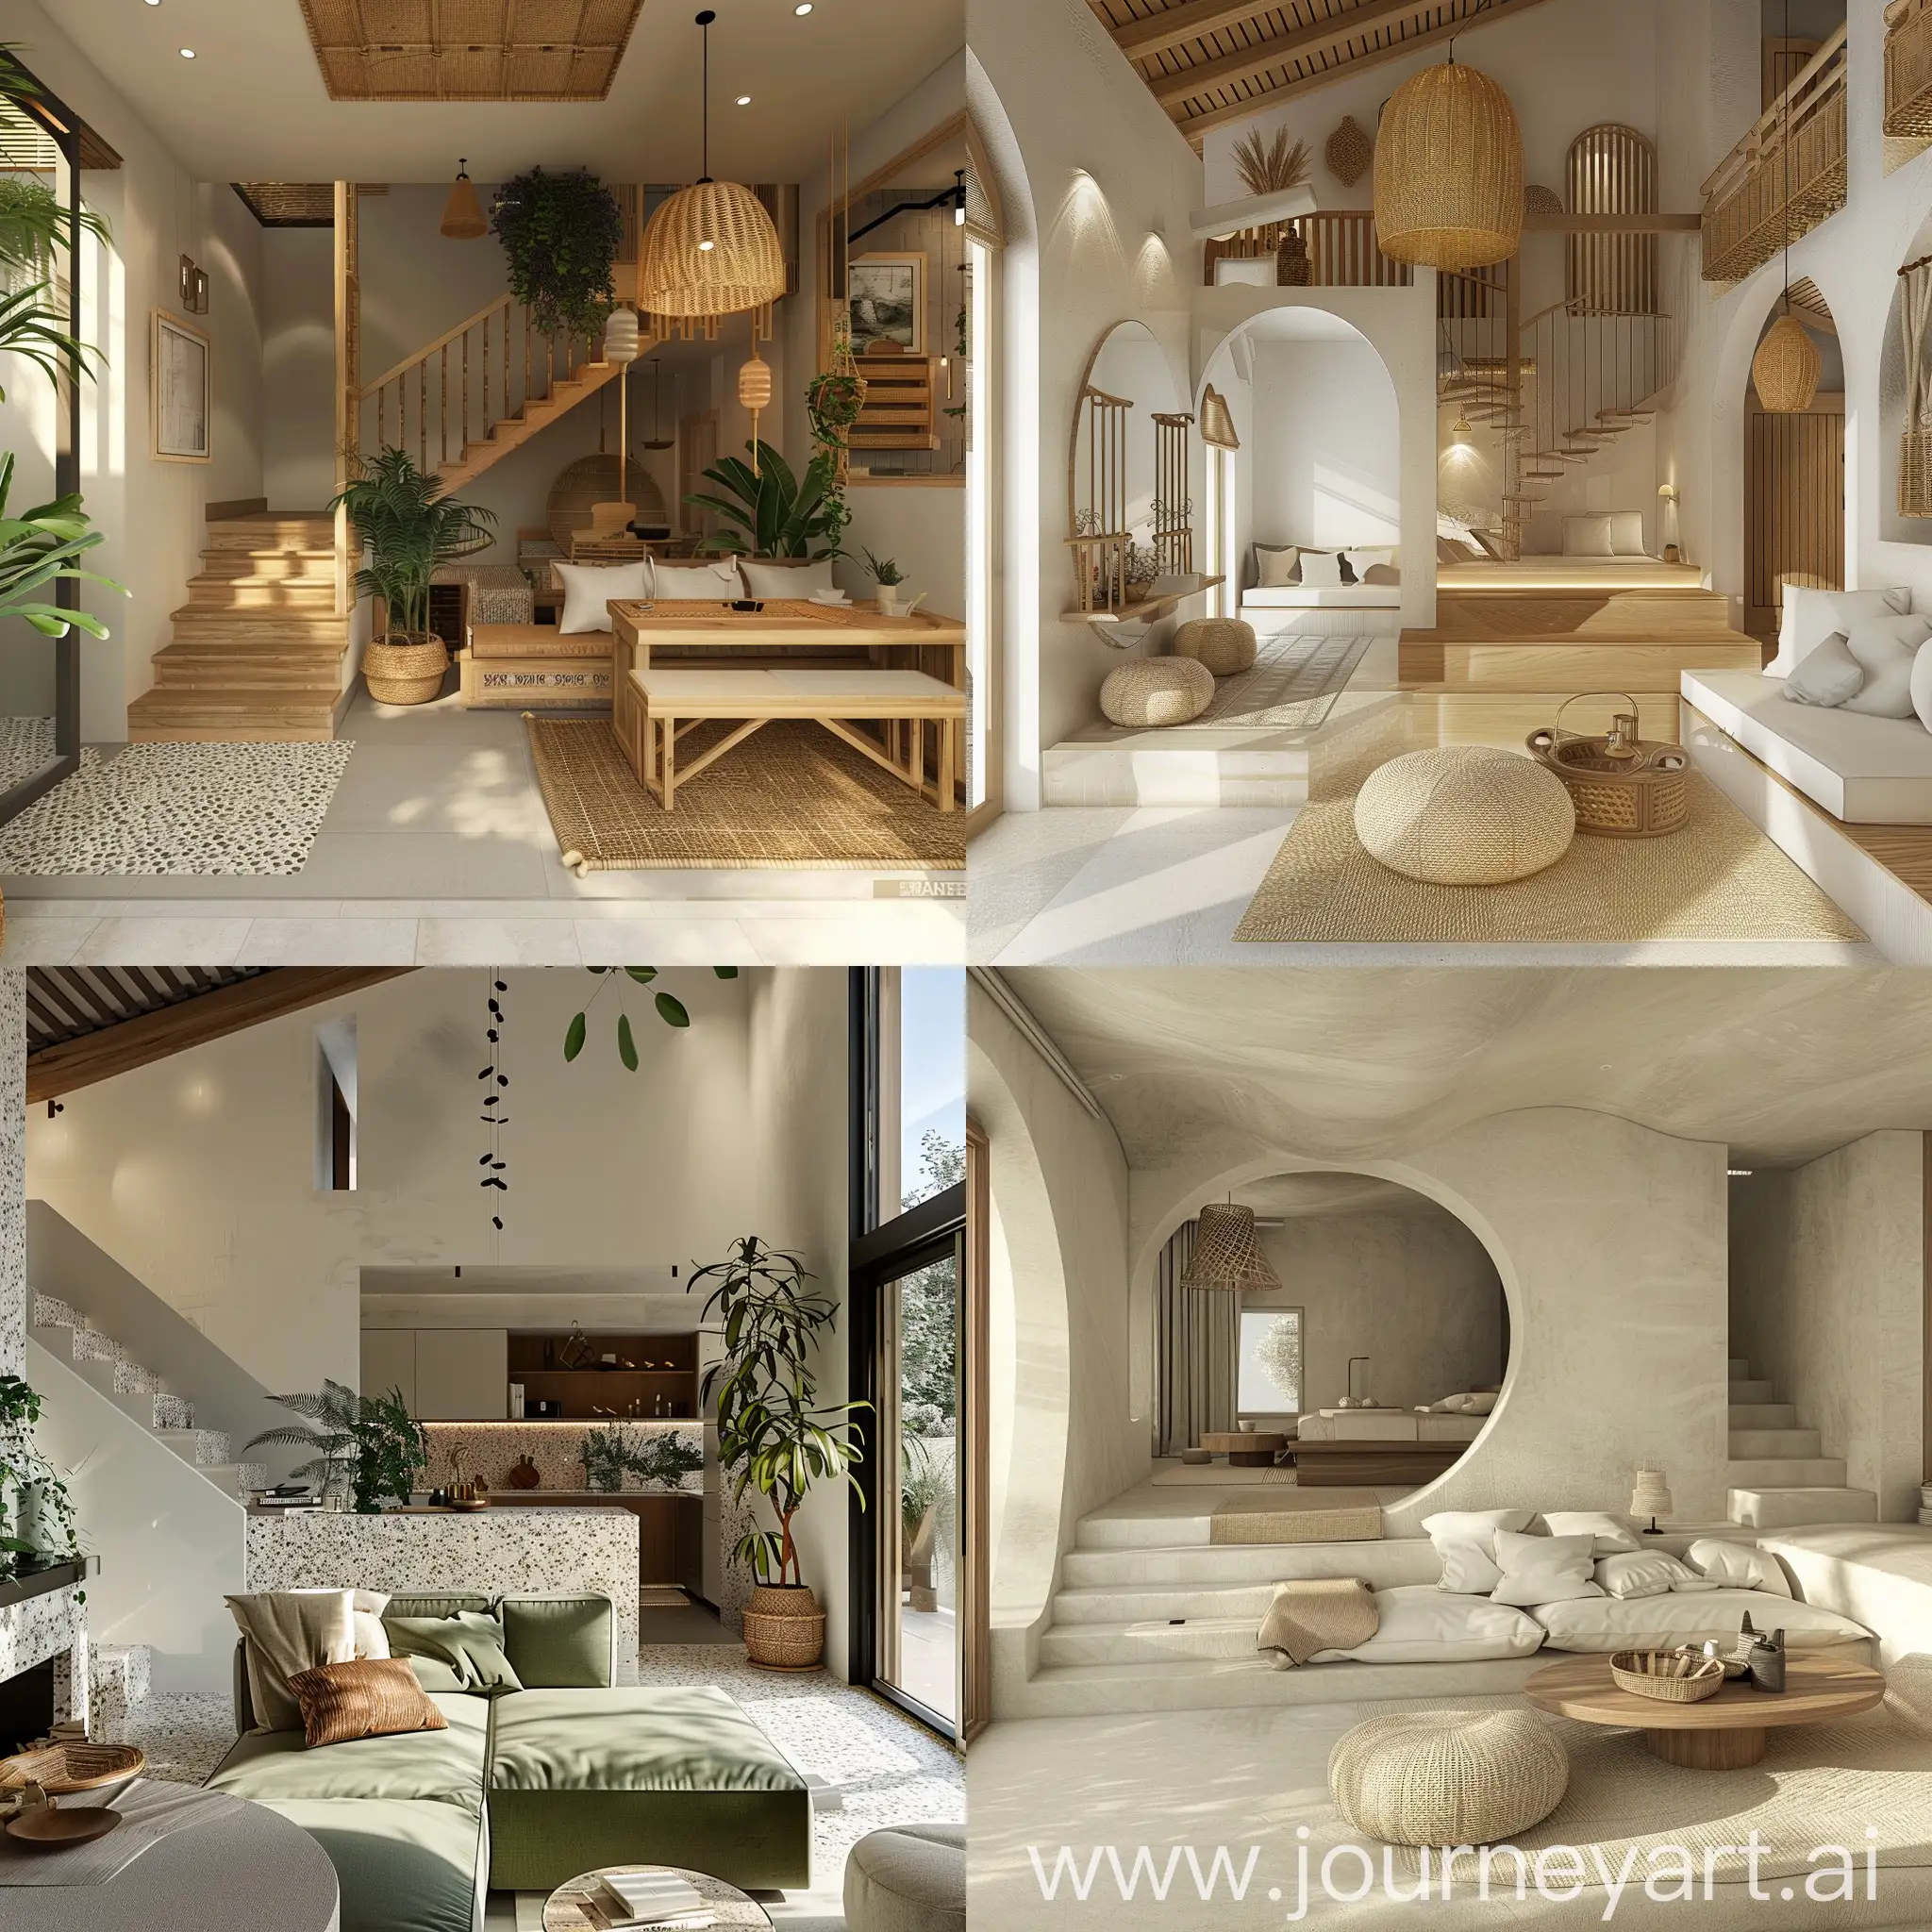 an interior for a small villa like a day dream